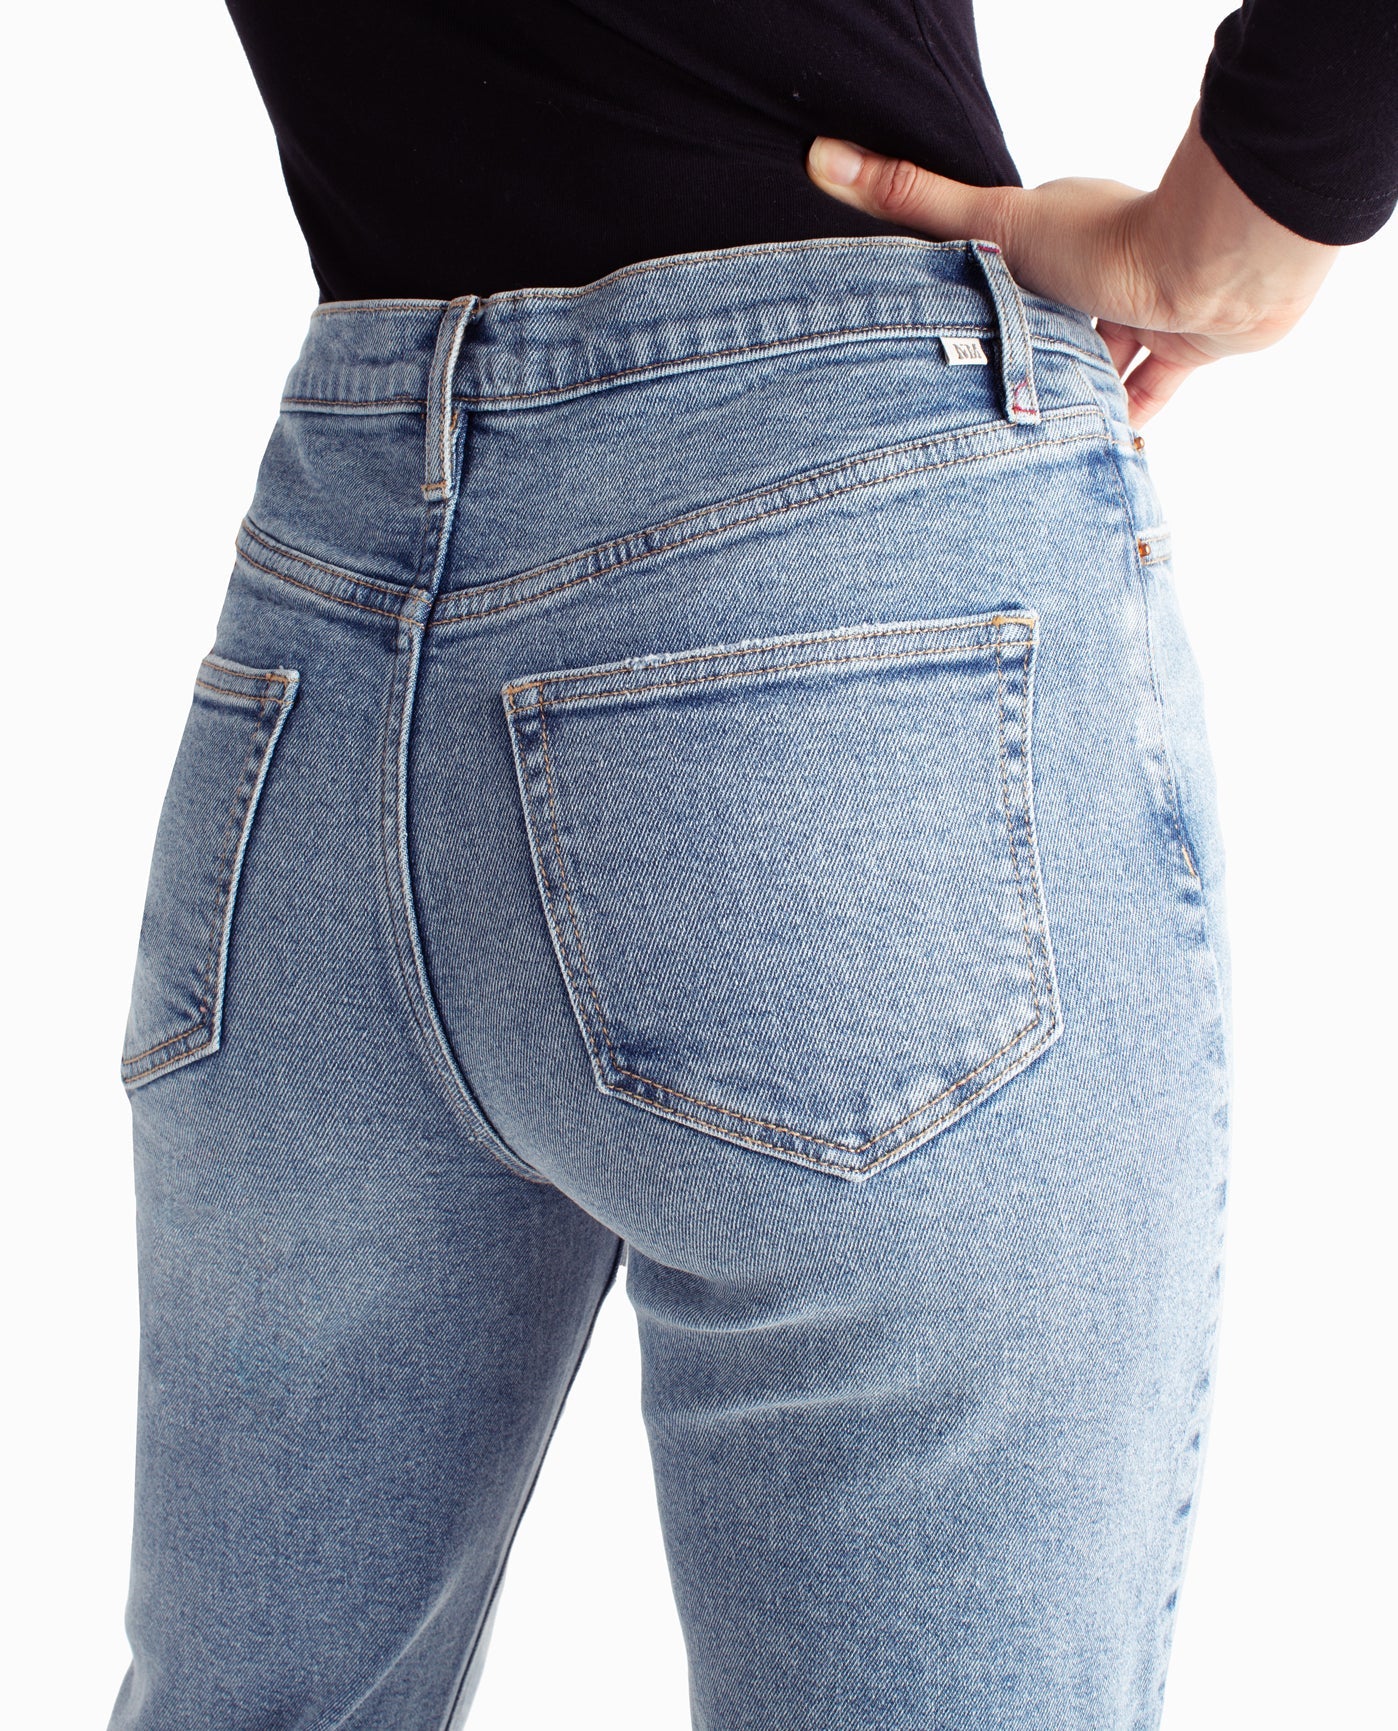 Women's Nicole Miller Designer Boerum Hill High Rise Slim Fit Jean